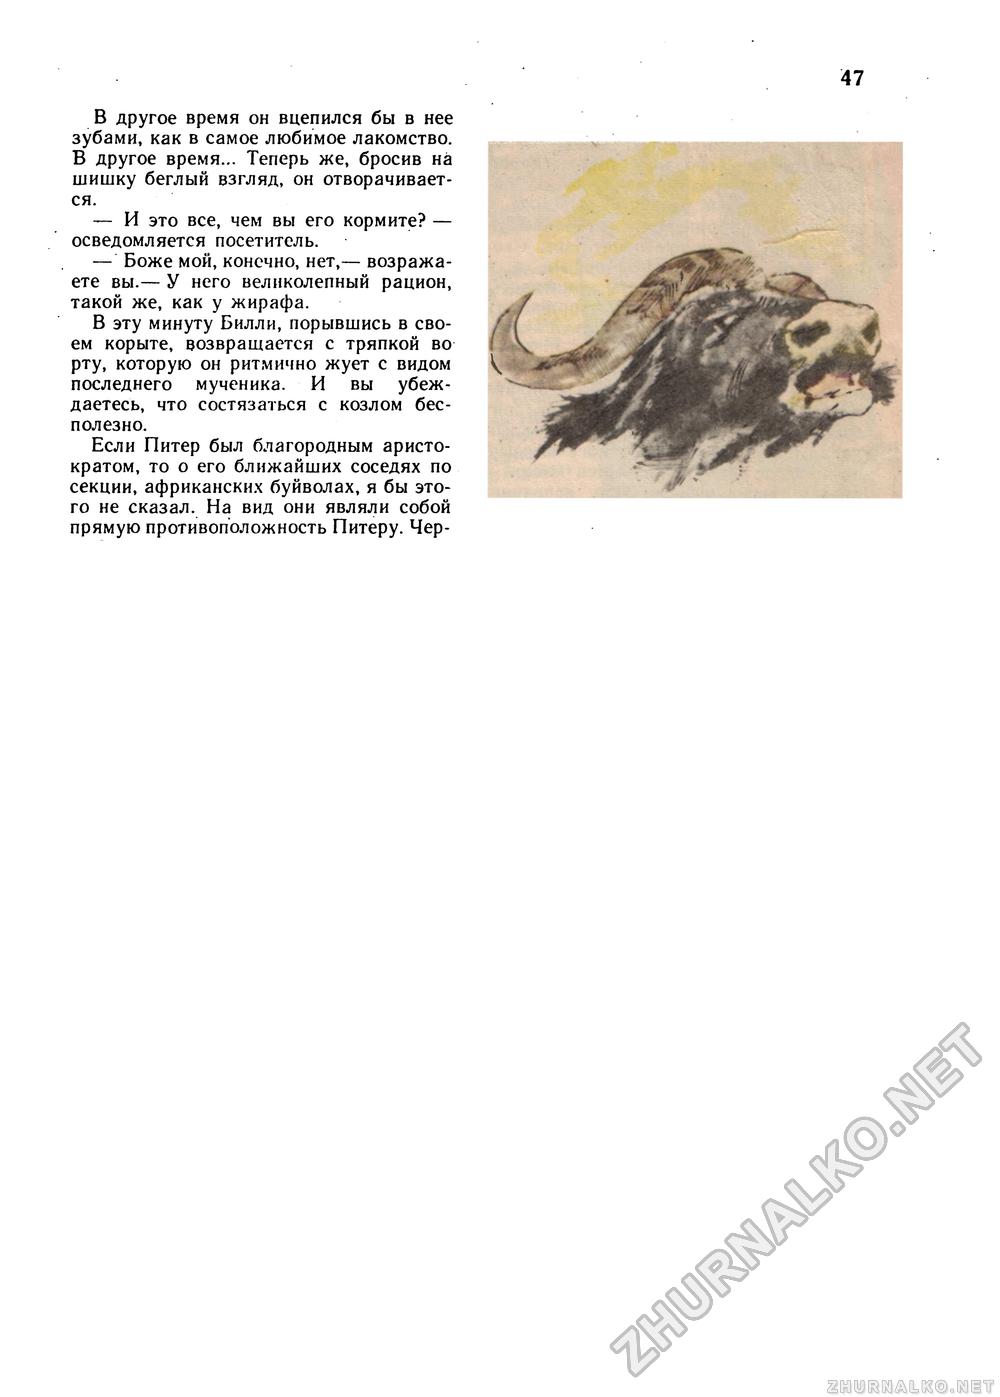 Юный Натуралист 1992-01, страница 45